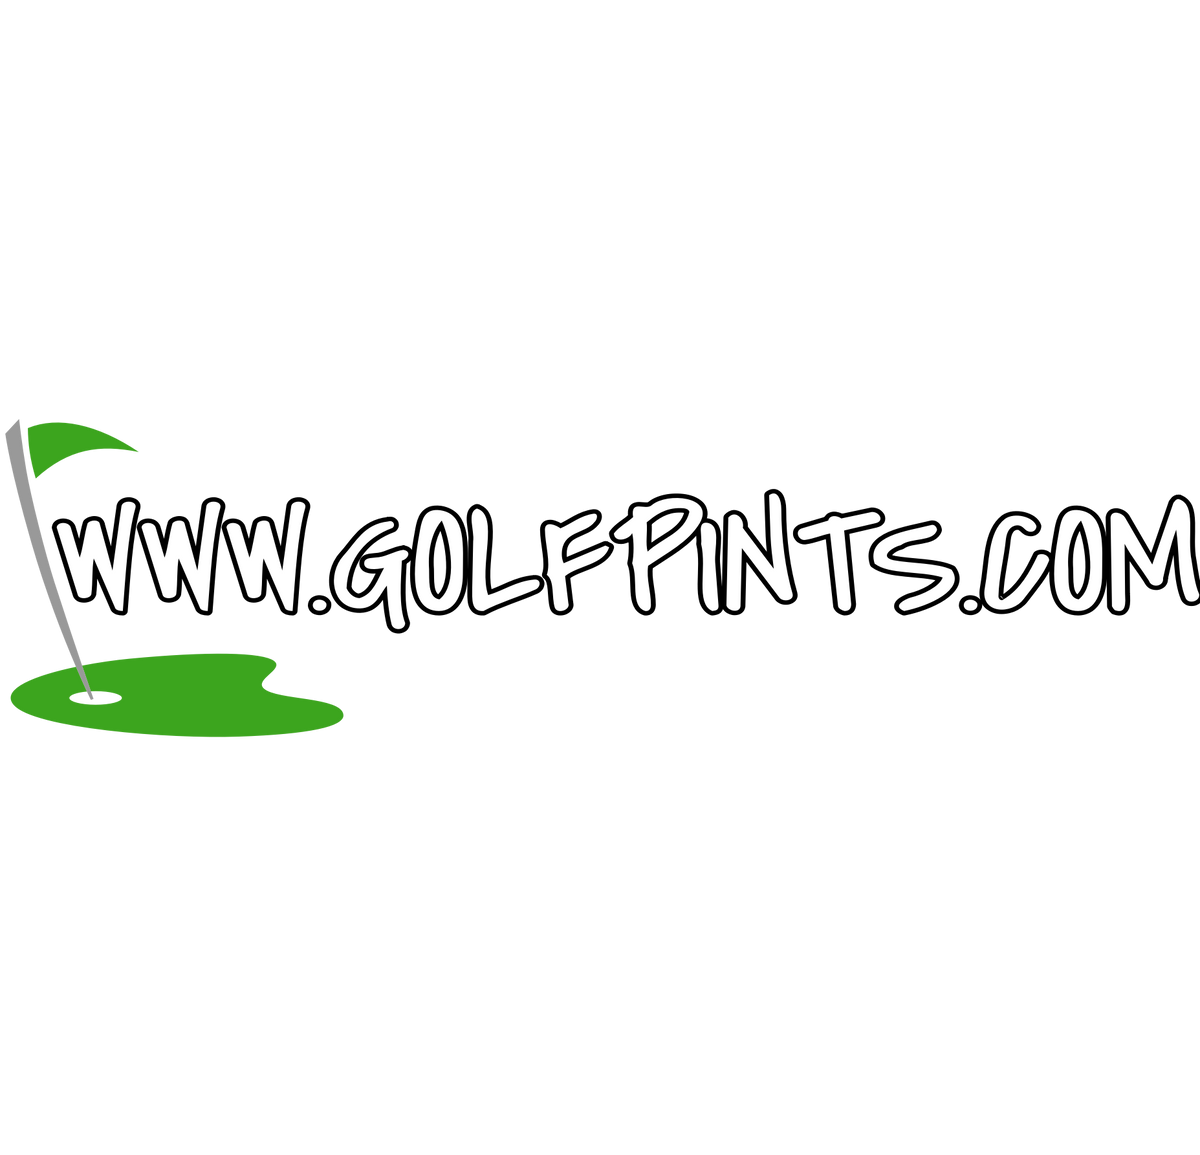 www.golfpints.com